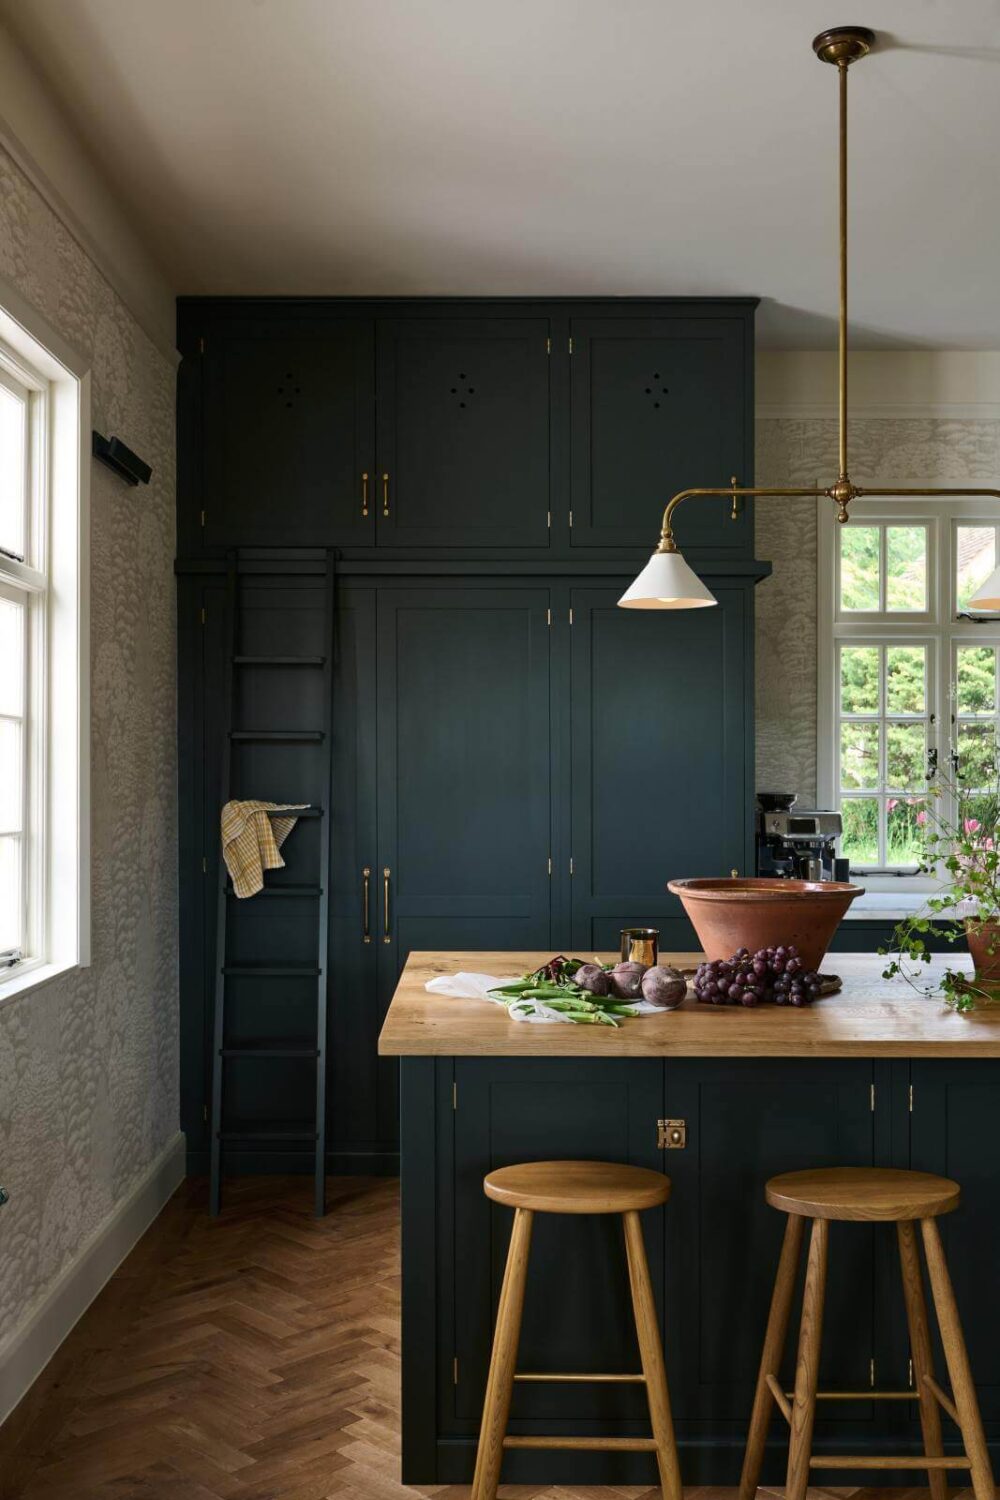 dark-green-kitchen-cabinets-island-breakfast-bar-zoe-ballountry-house-nordroom